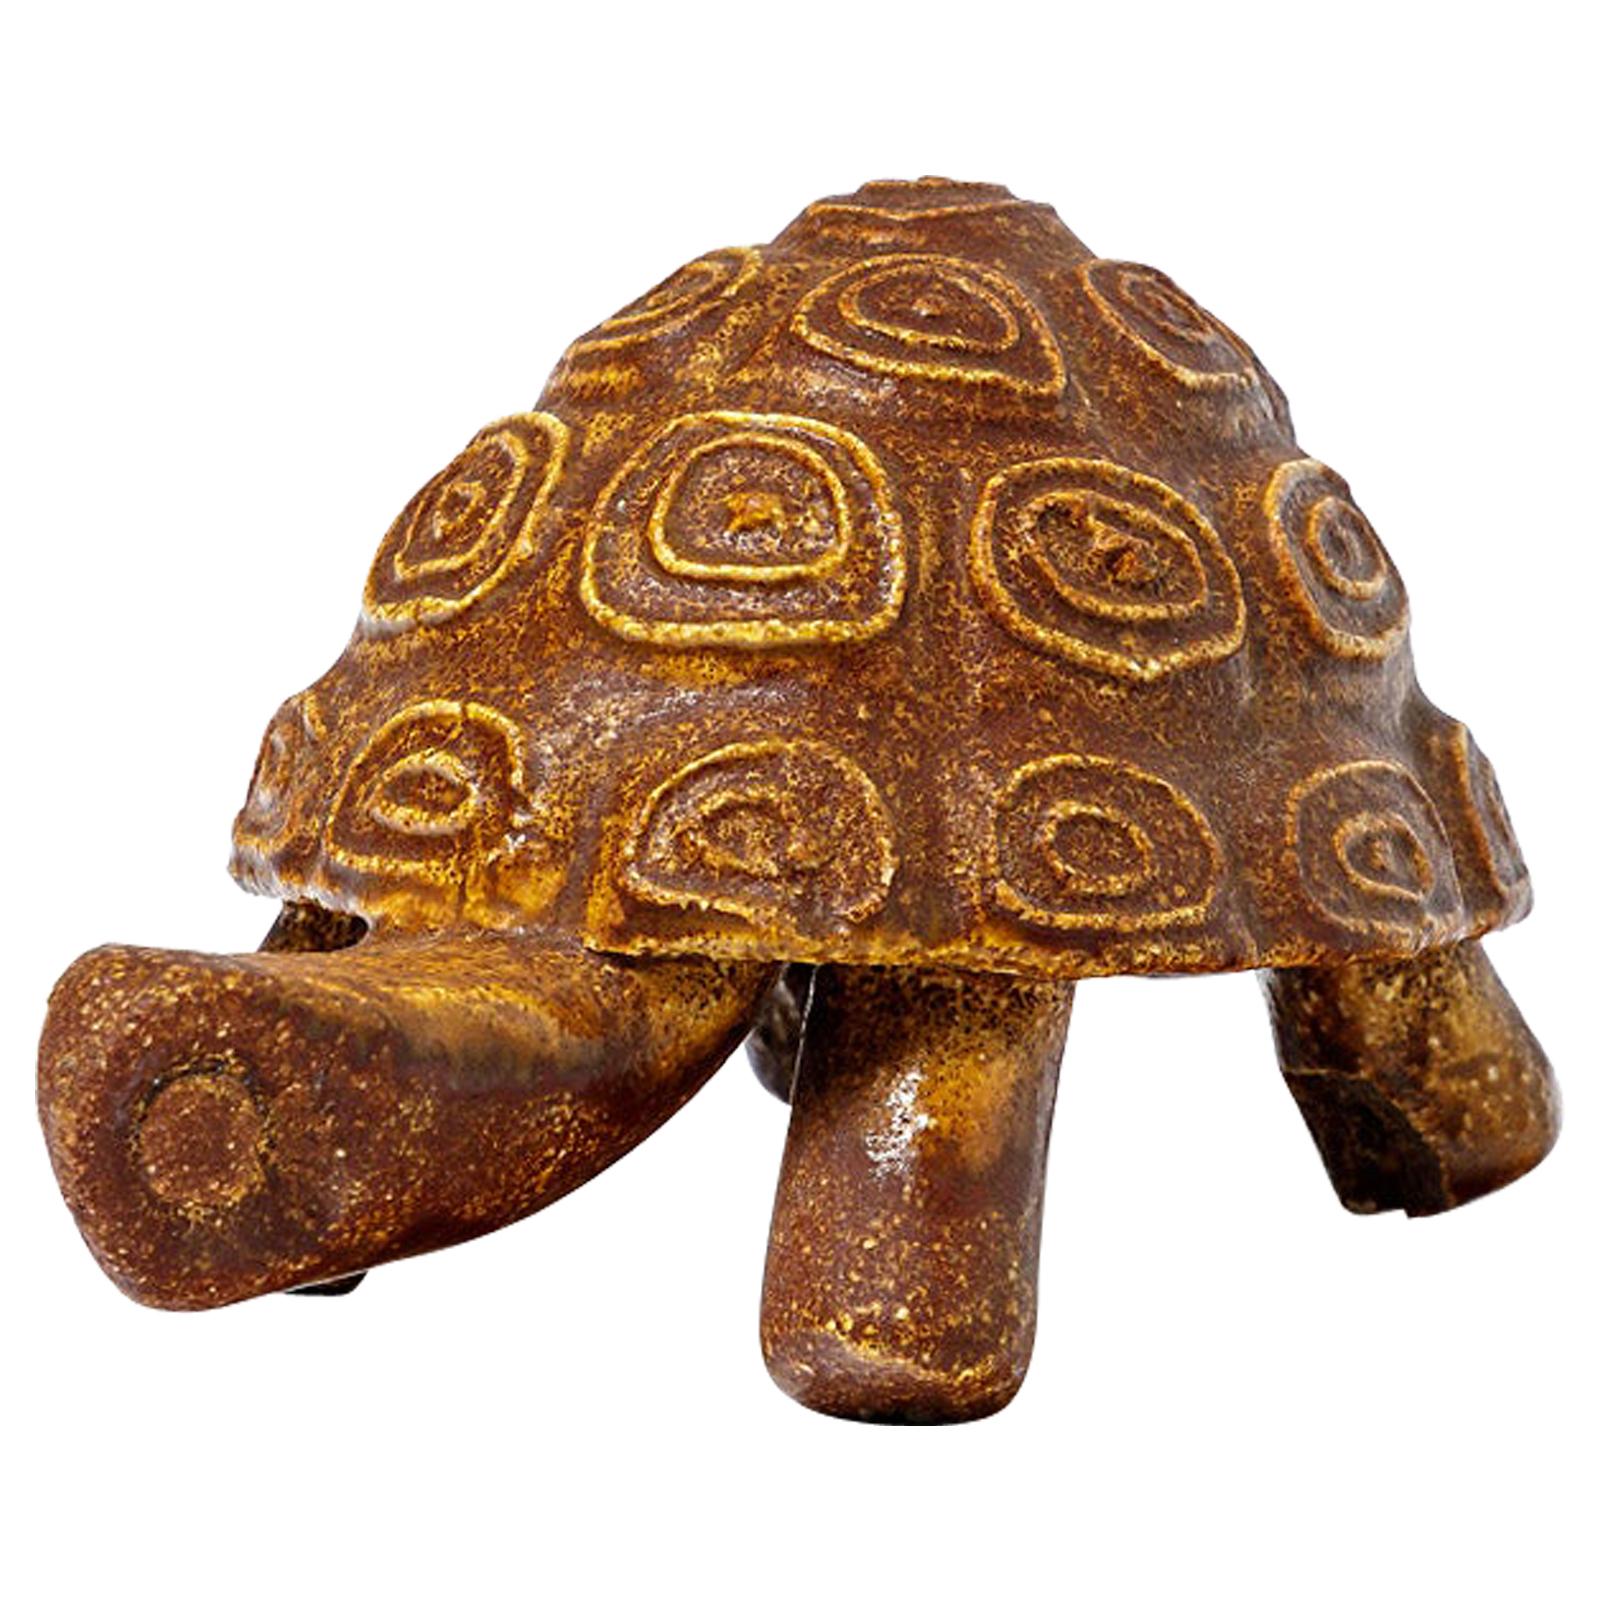 Ceramic Animal Sculpture Turtle by Accolay circa 1960 Orange Glaze Color